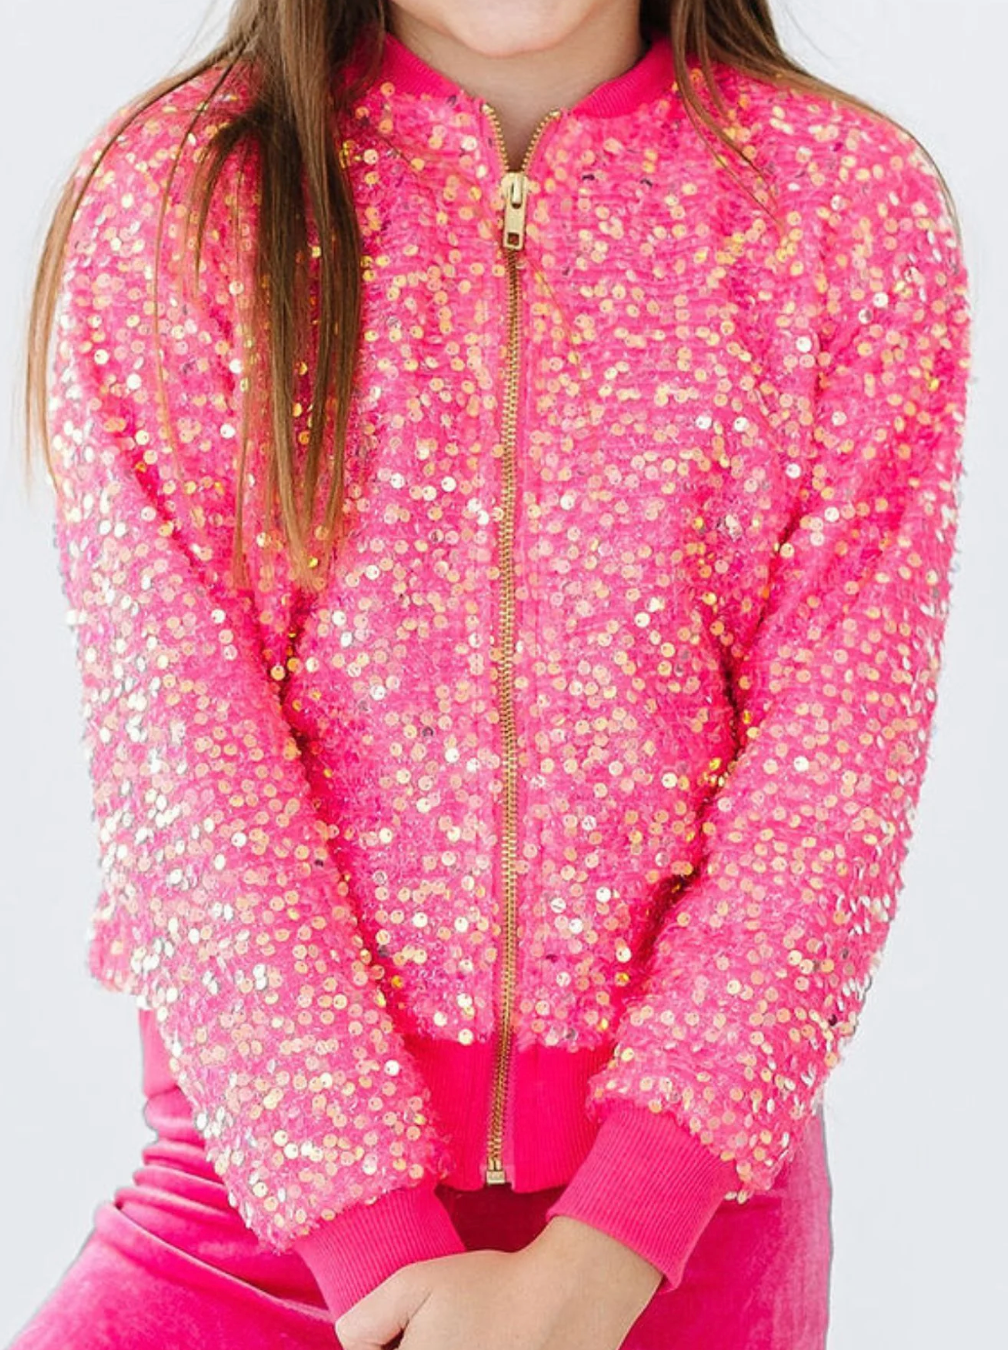 LL Bean Thinsulate Hooded Winter Parka Jacket Girls L 14 16 Colorblock Neon  Ski | eBay